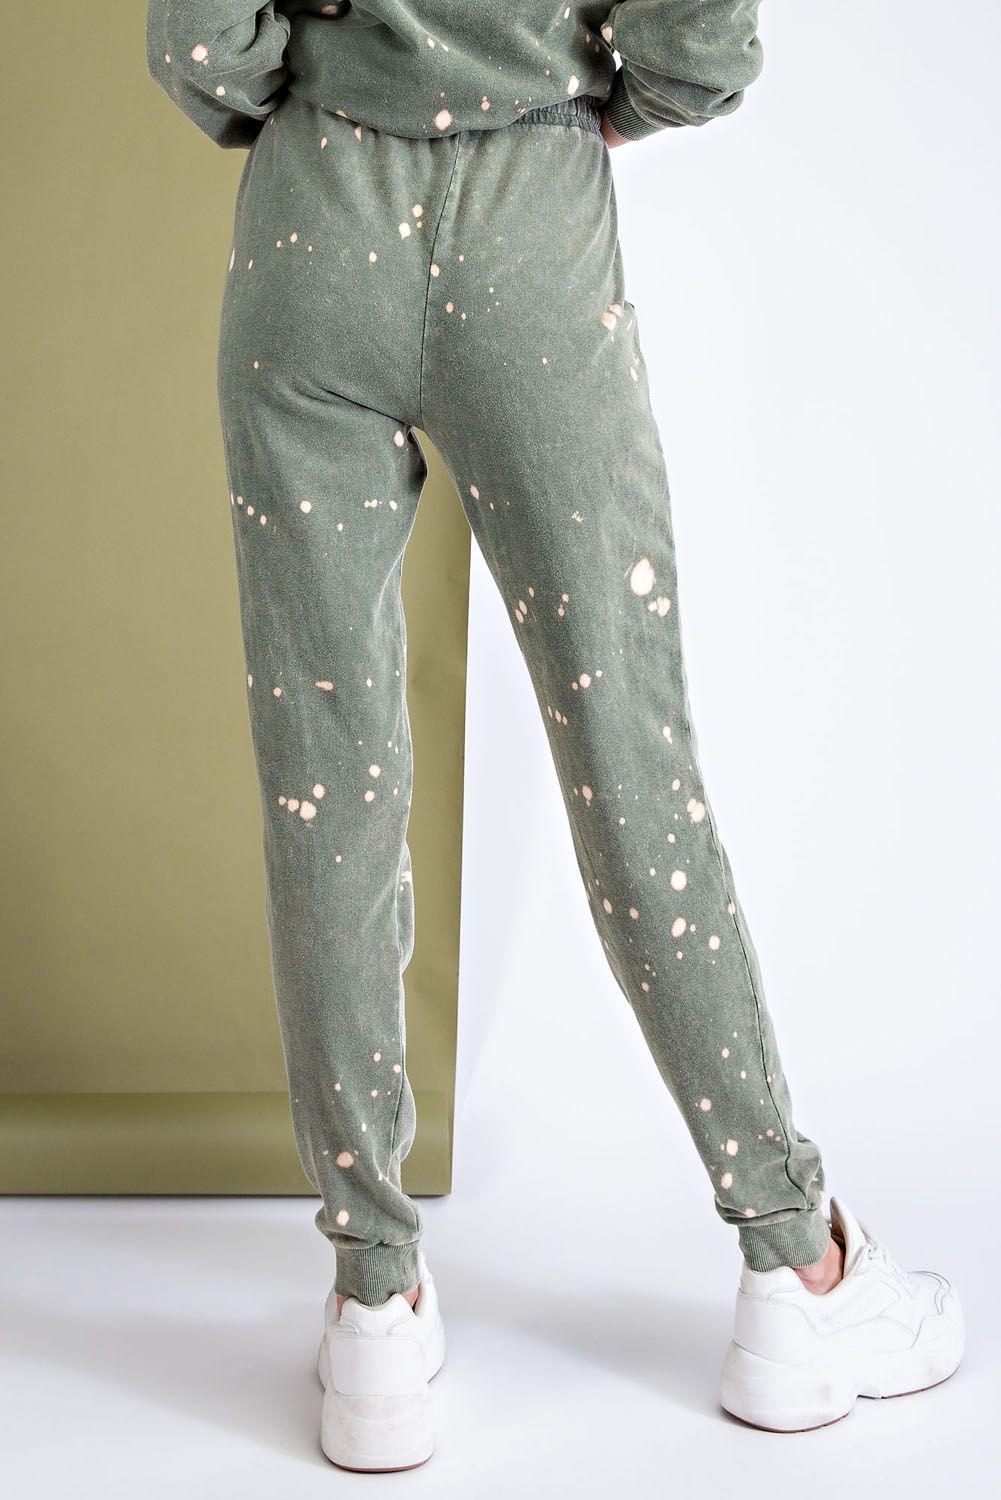 Buy Easel Drawstring Splattered Bleach Out Garment Dye Jogger Pants by Sensual Fashion Boutique by Sensual Fashion Boutique